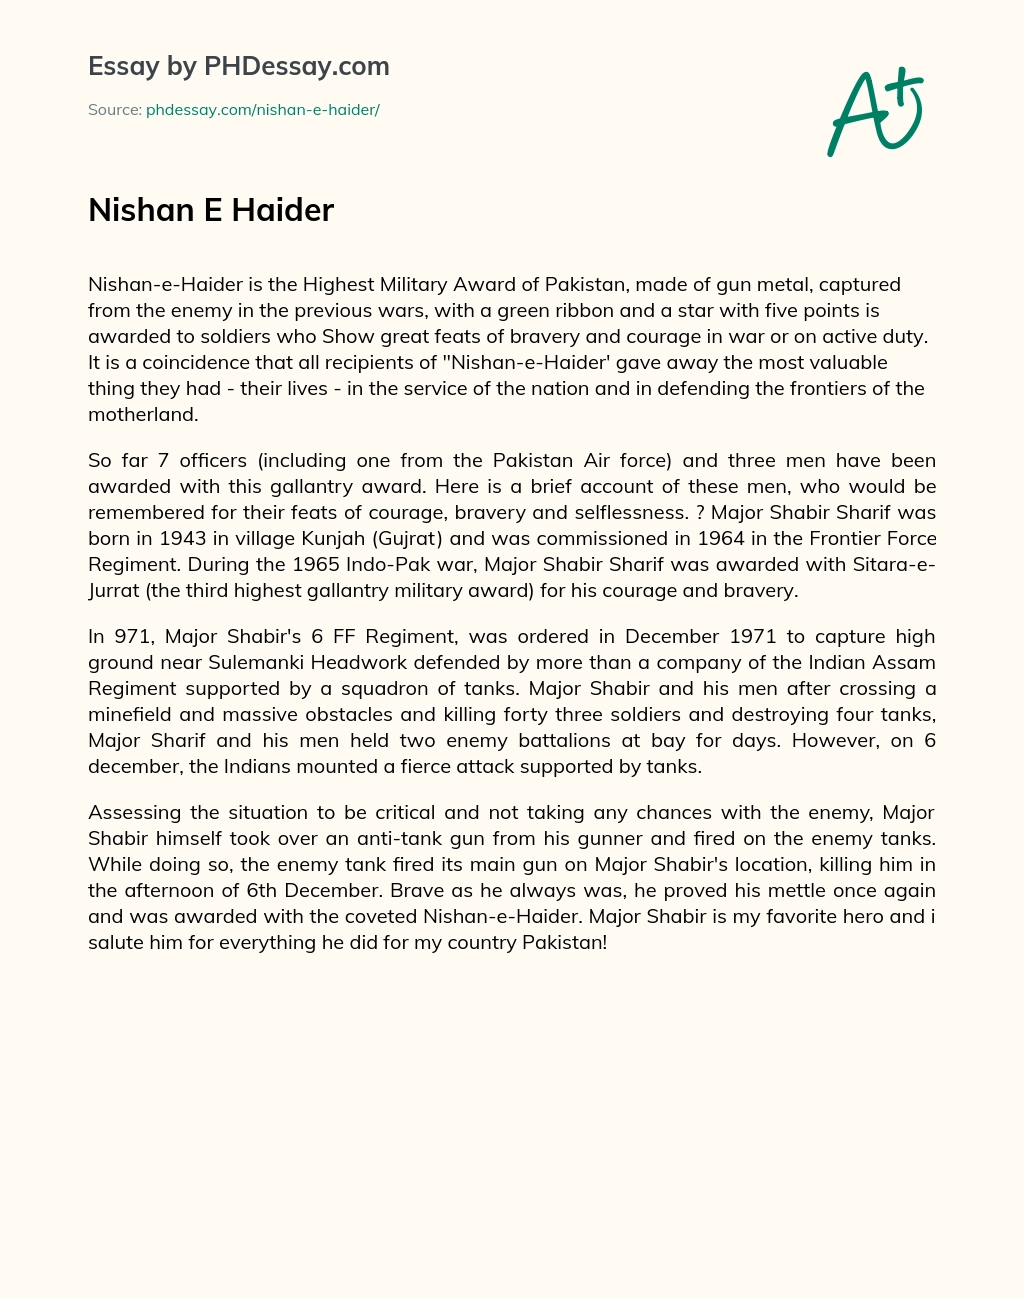 Nishan E Haider essay